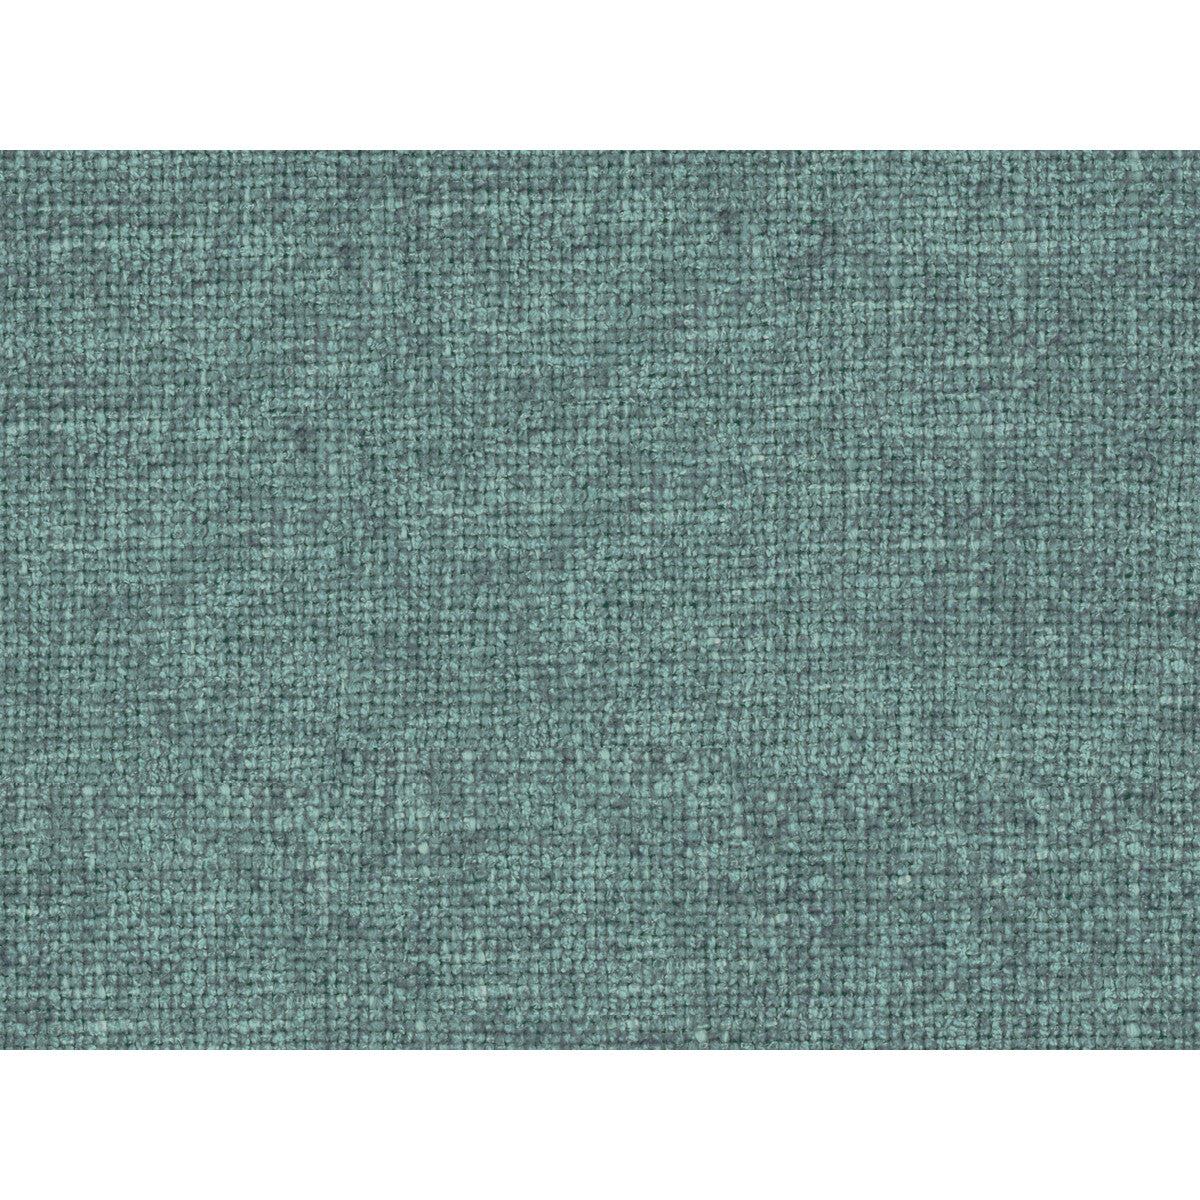 Kravet Smart fabric in 34293-15 color - pattern 34293.15.0 - by Kravet Smart